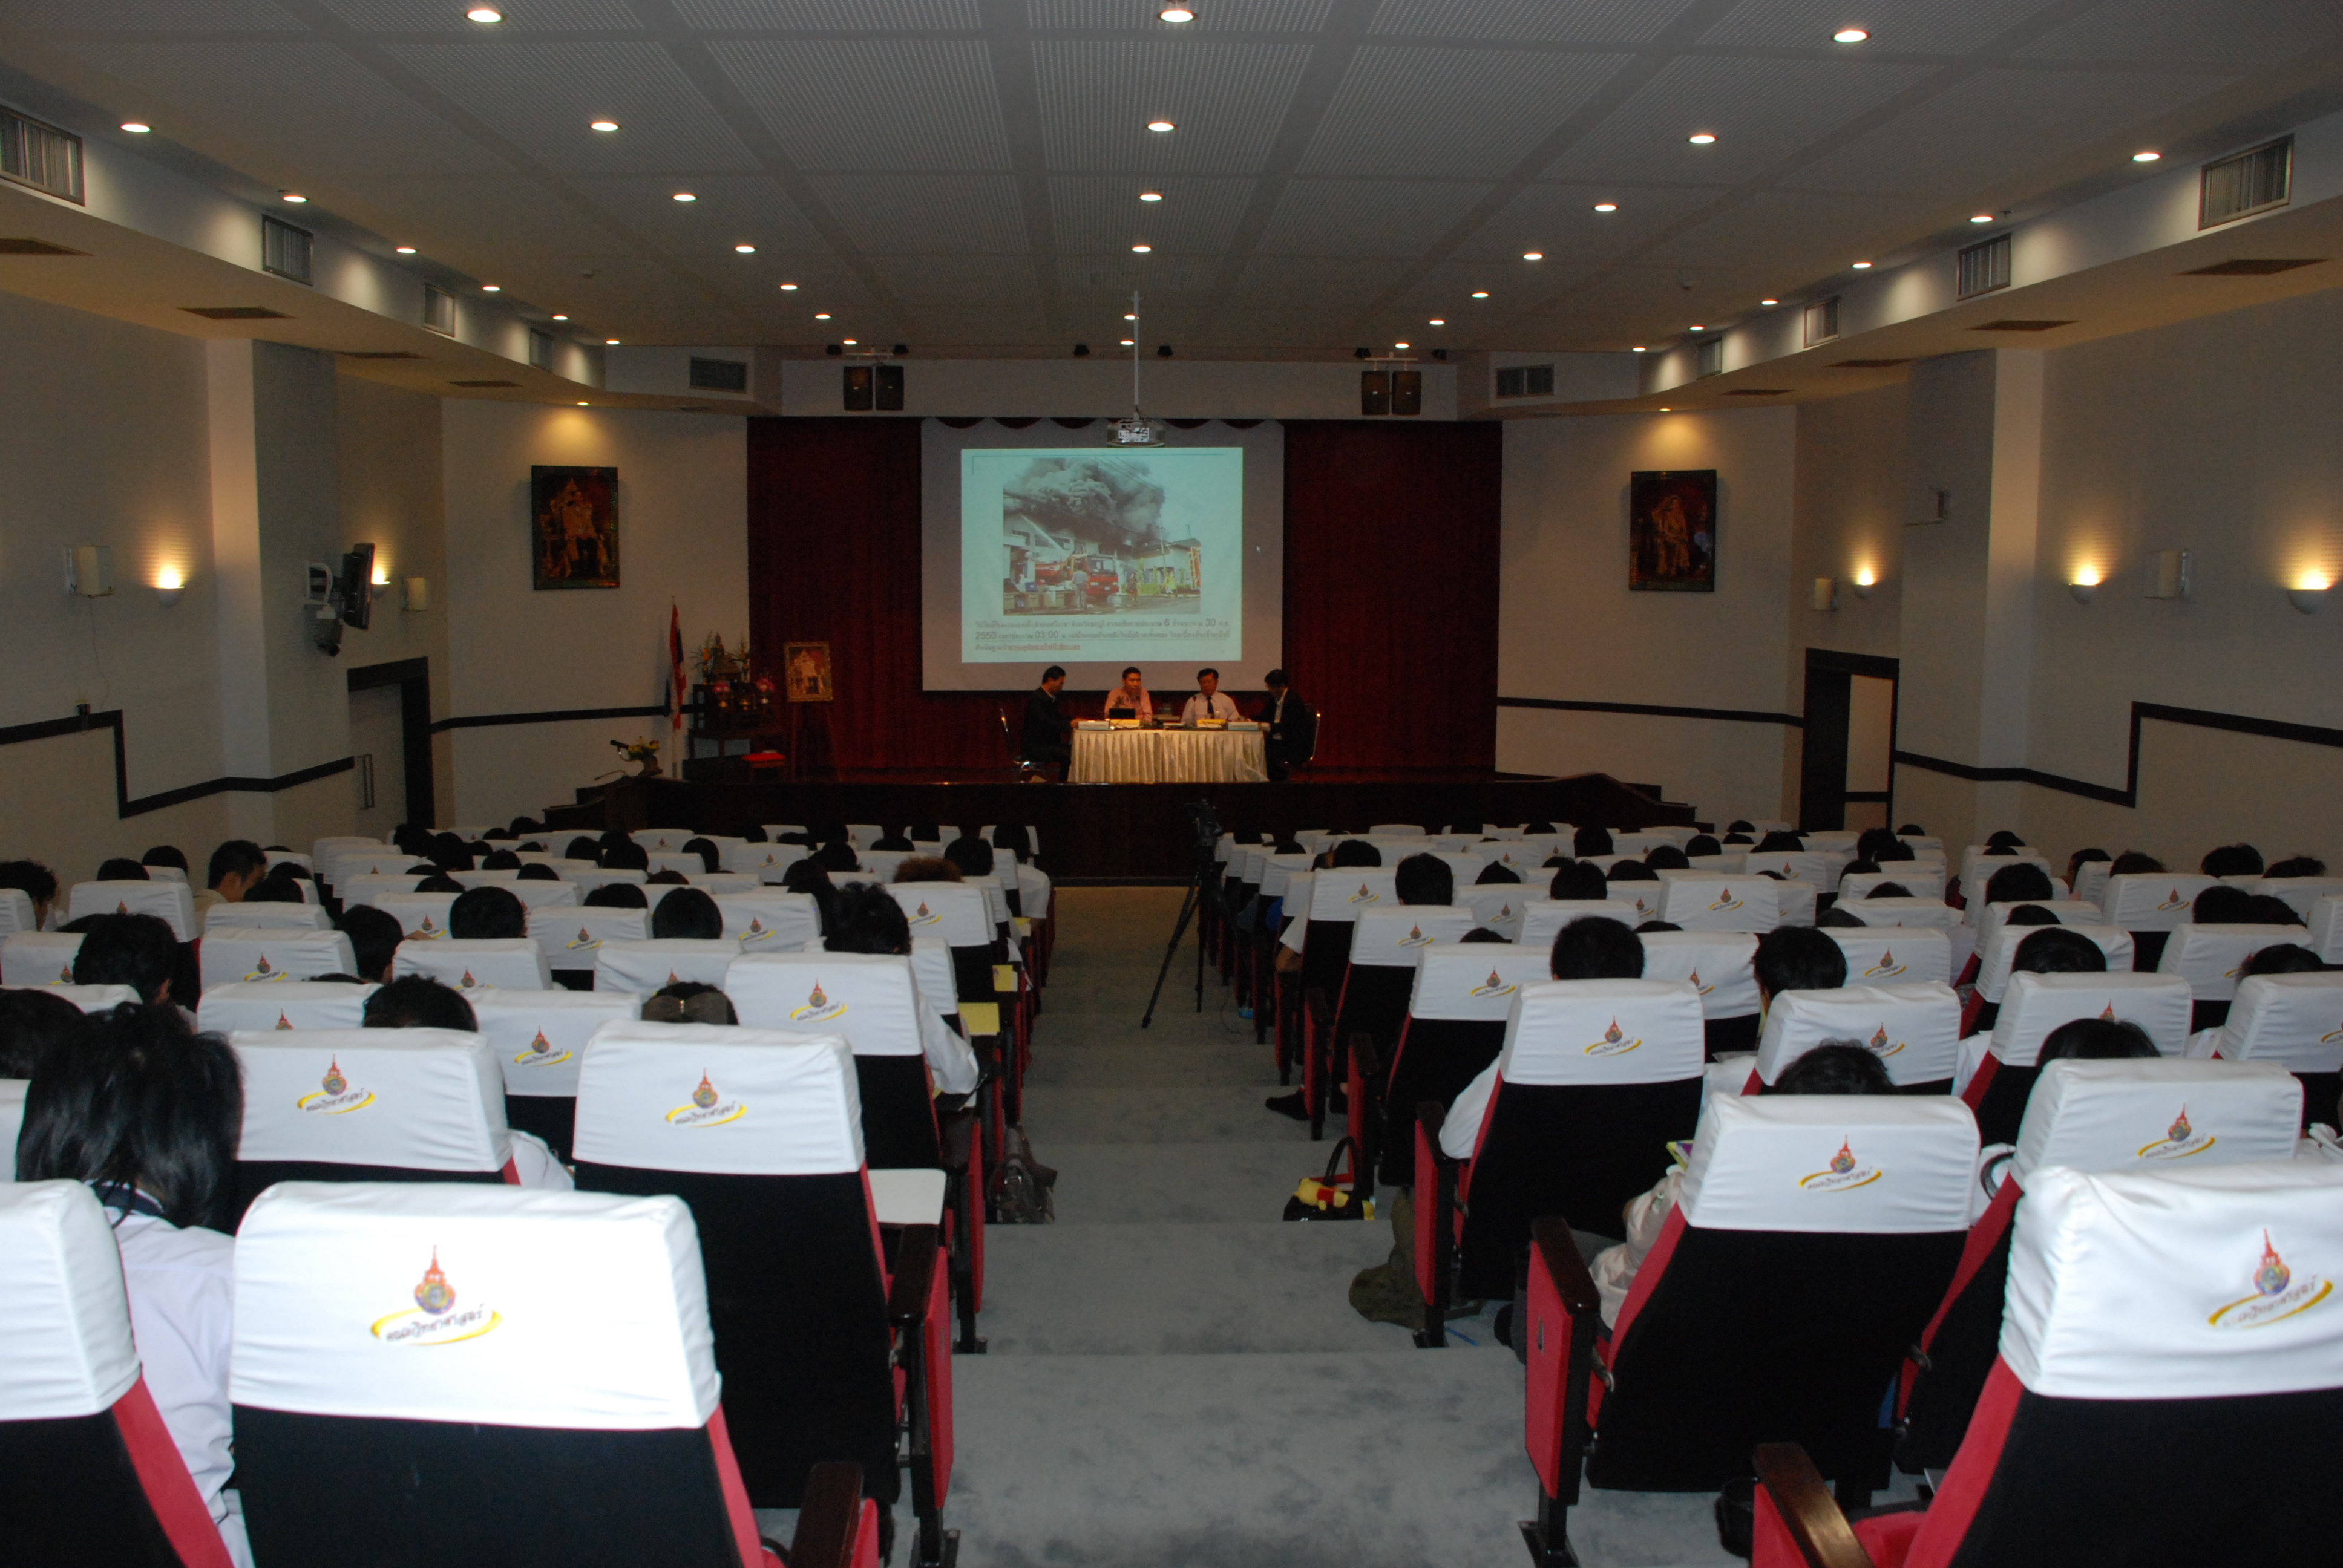 The academic seminar conducted at RMUTT